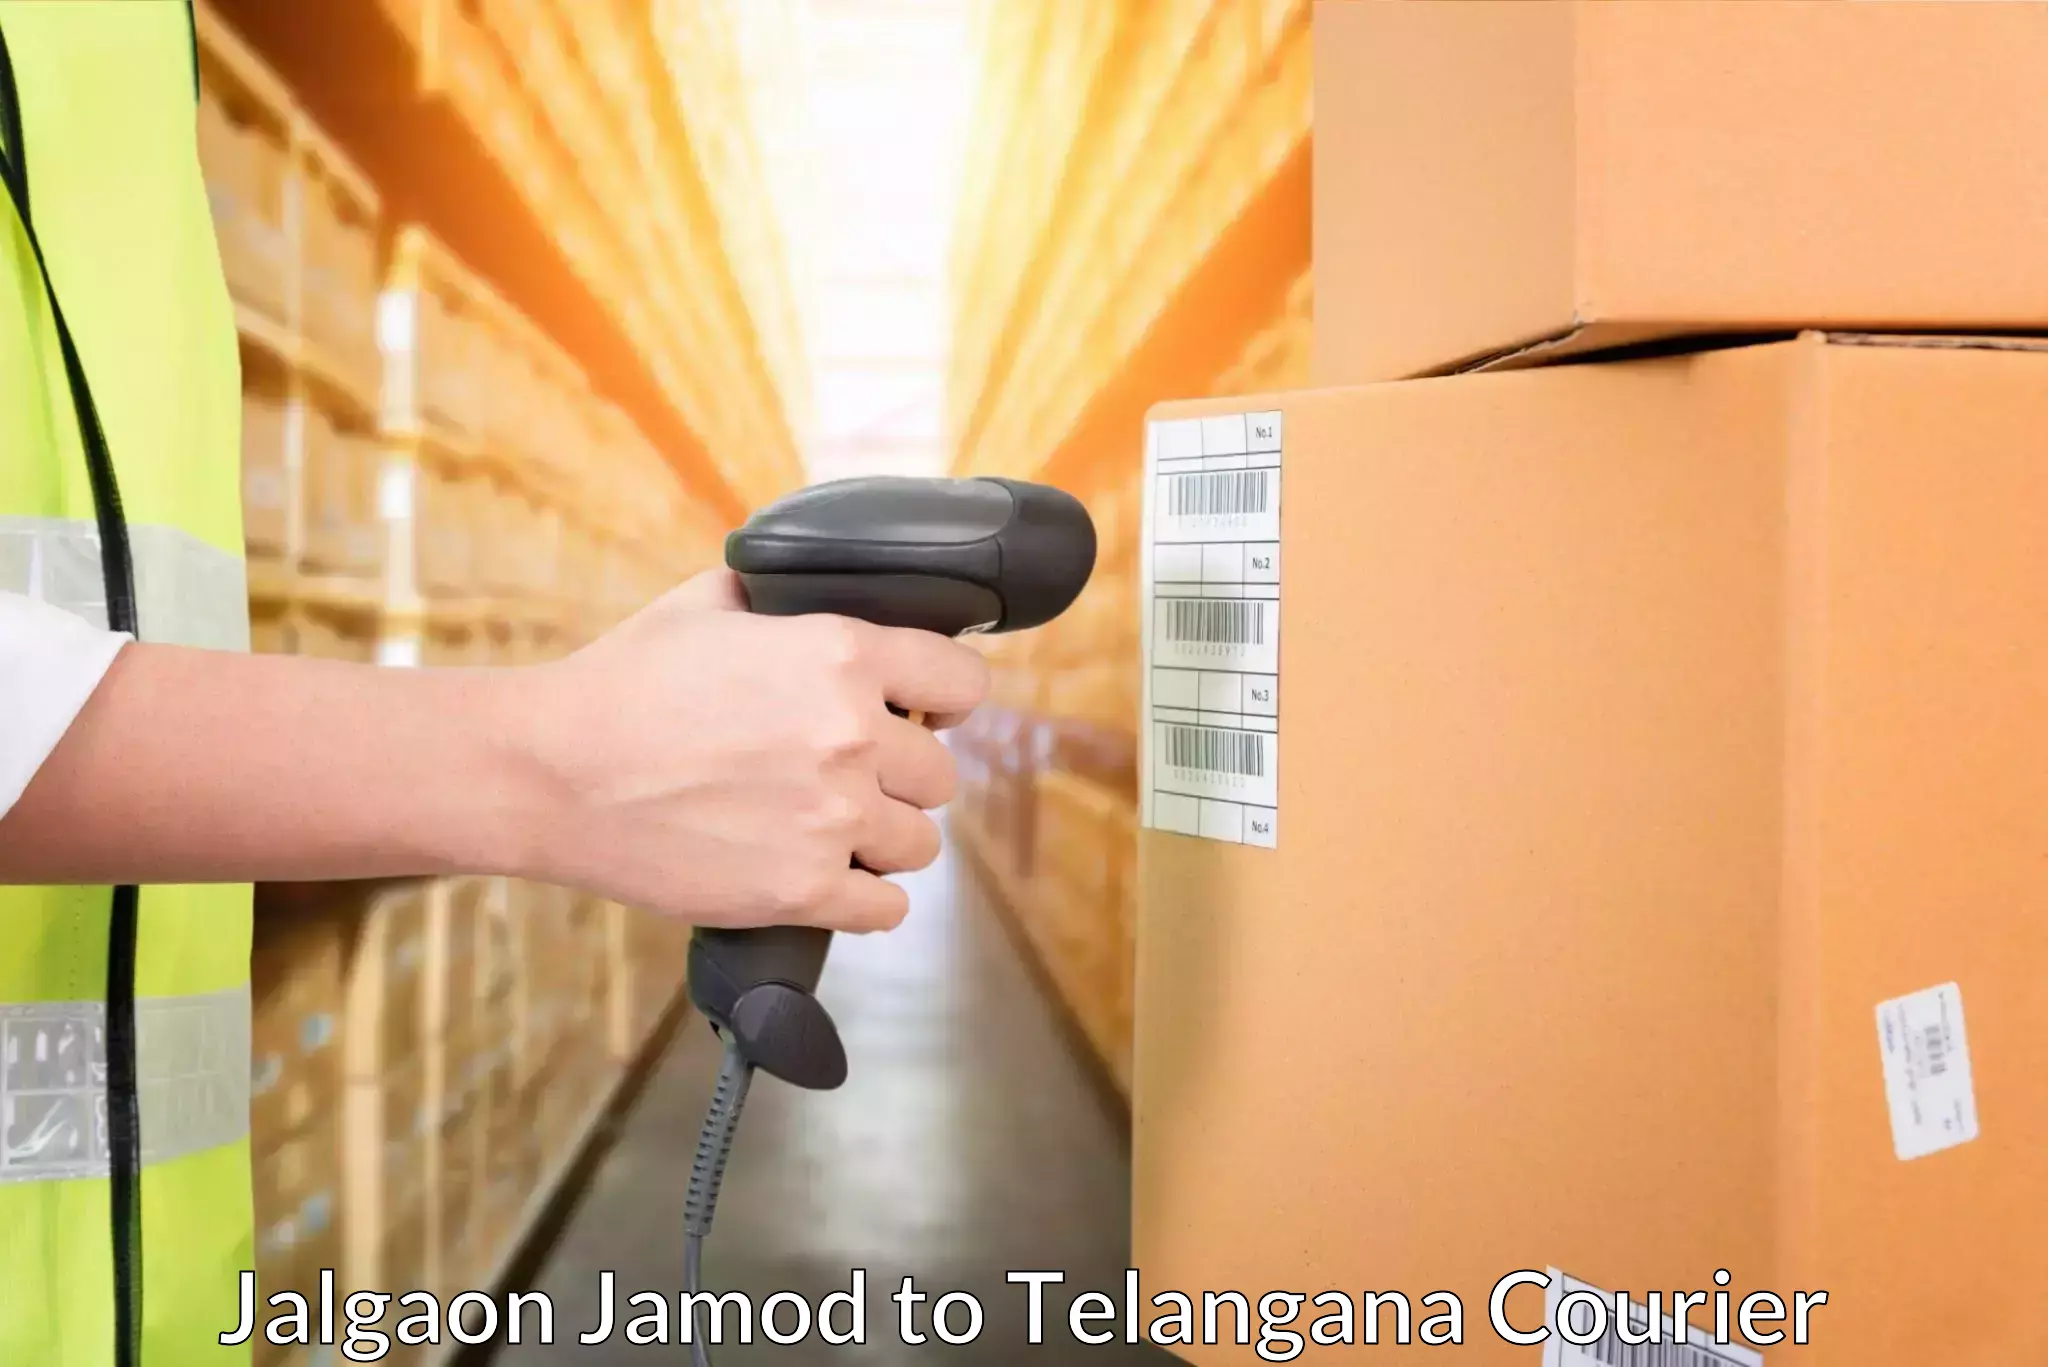 Cash on delivery service Jalgaon Jamod to Jogulamba Gadwal